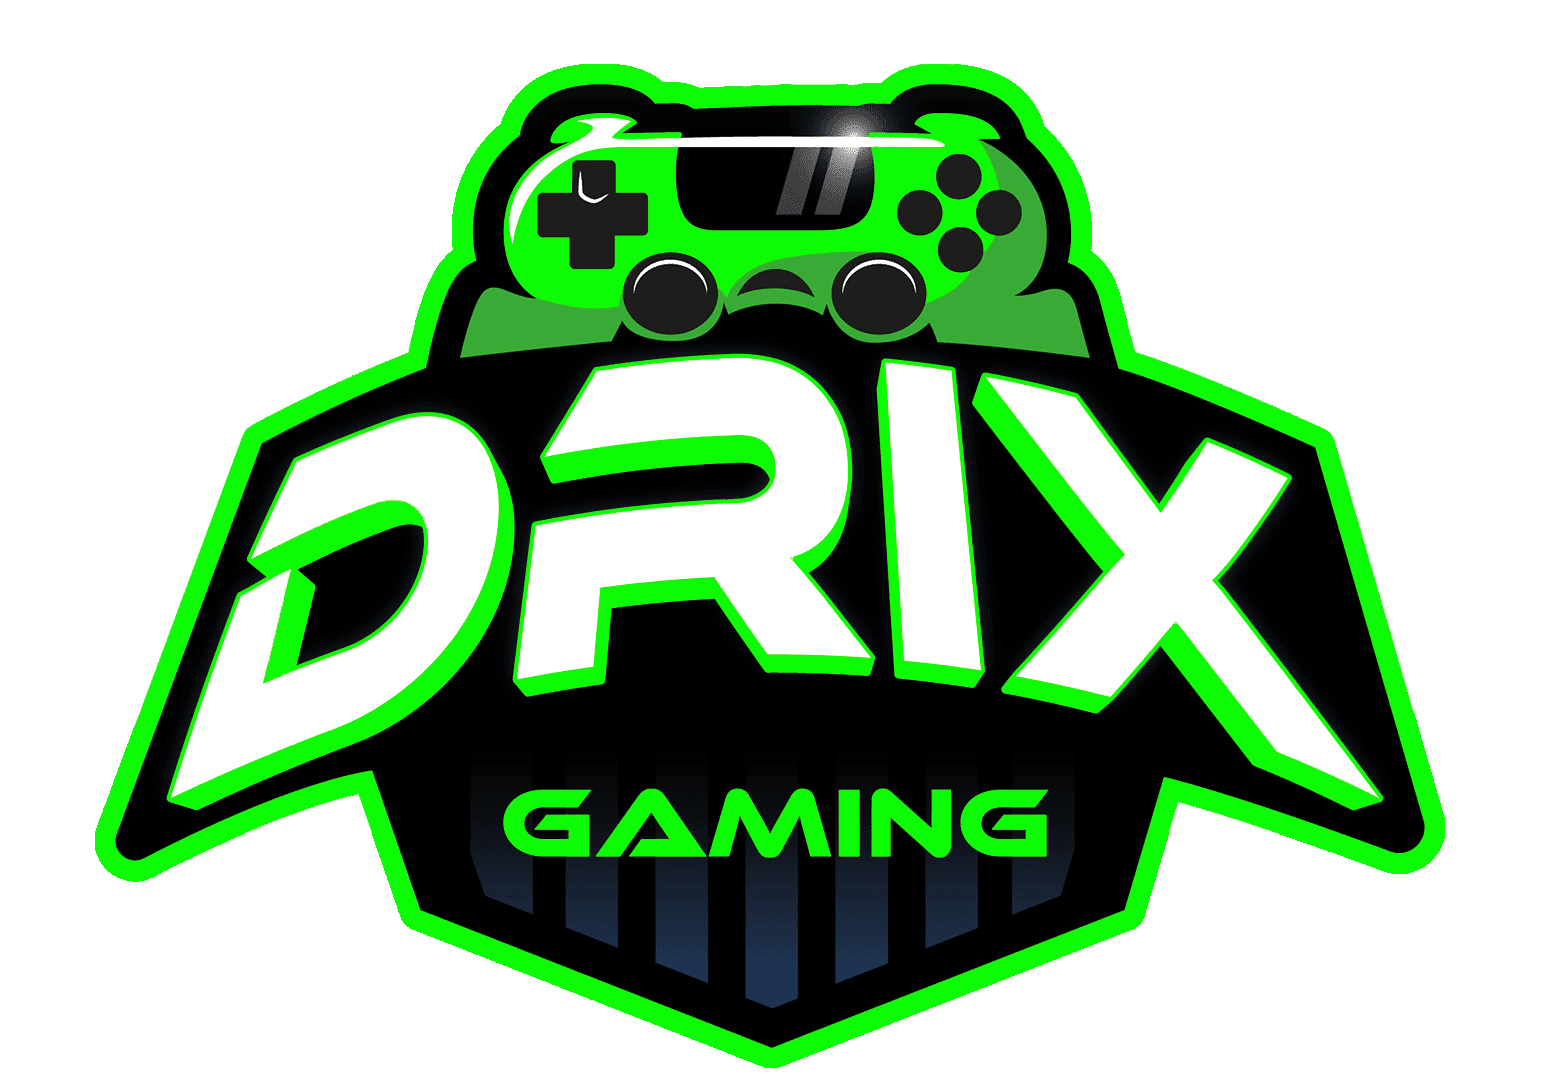 Drix Gaming